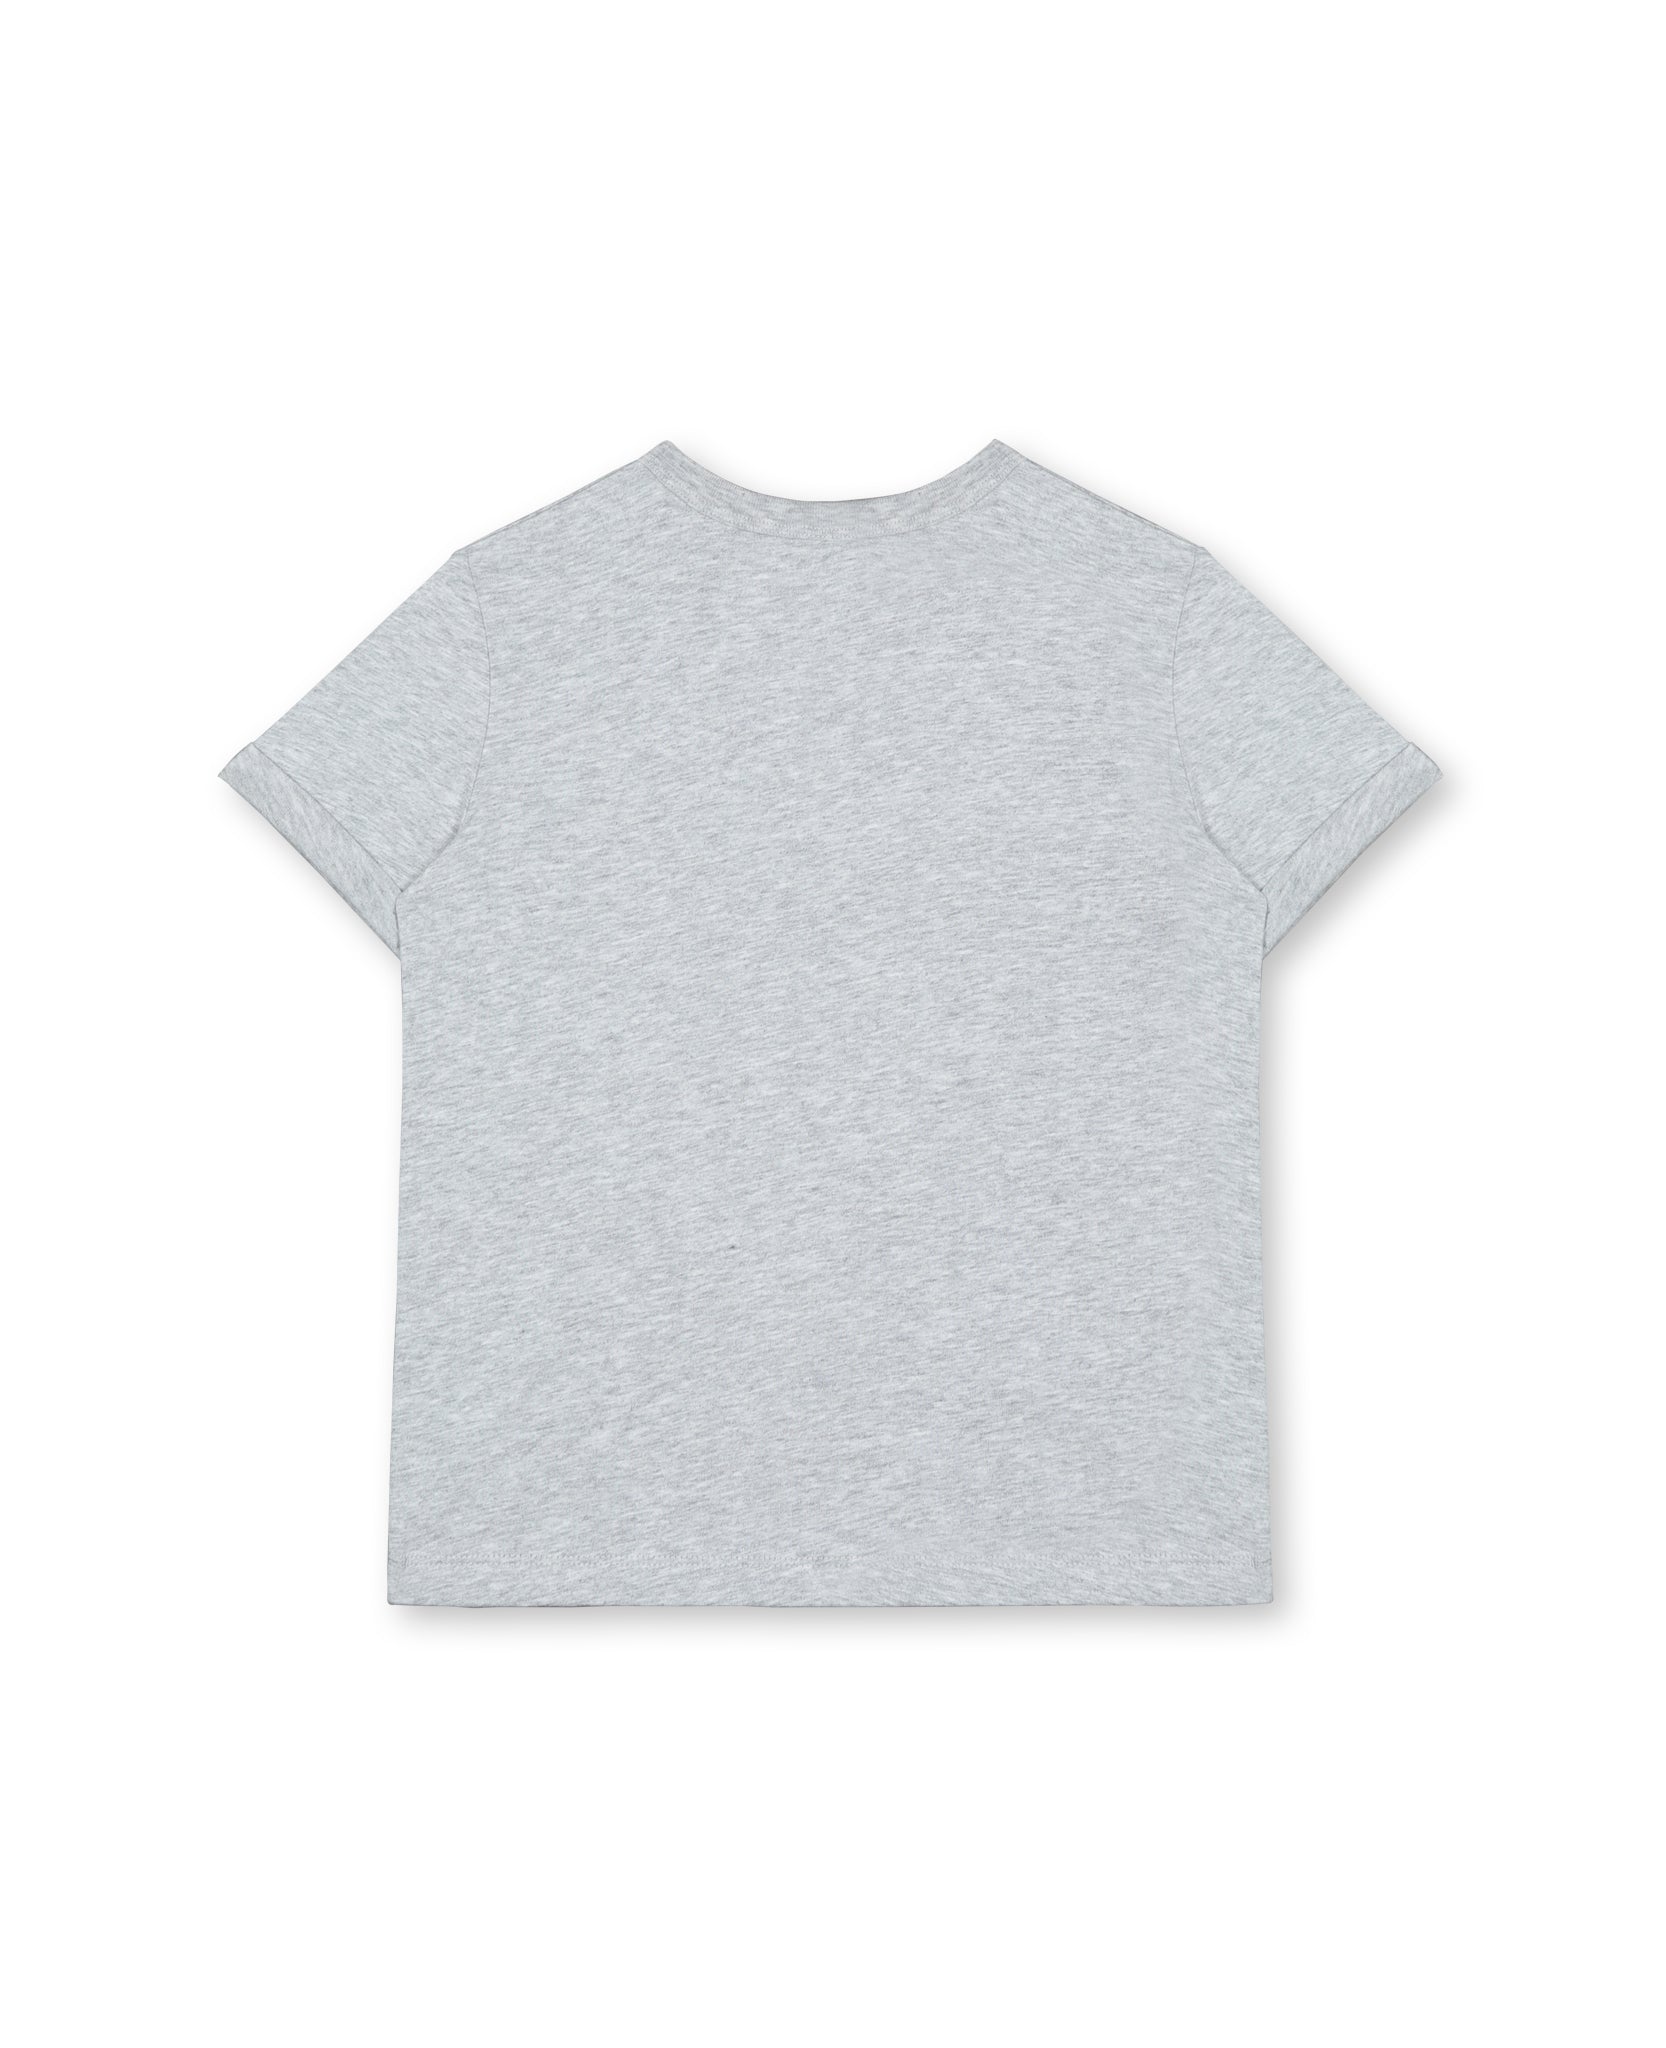 Girls Grey Painted Cotton T-shirt